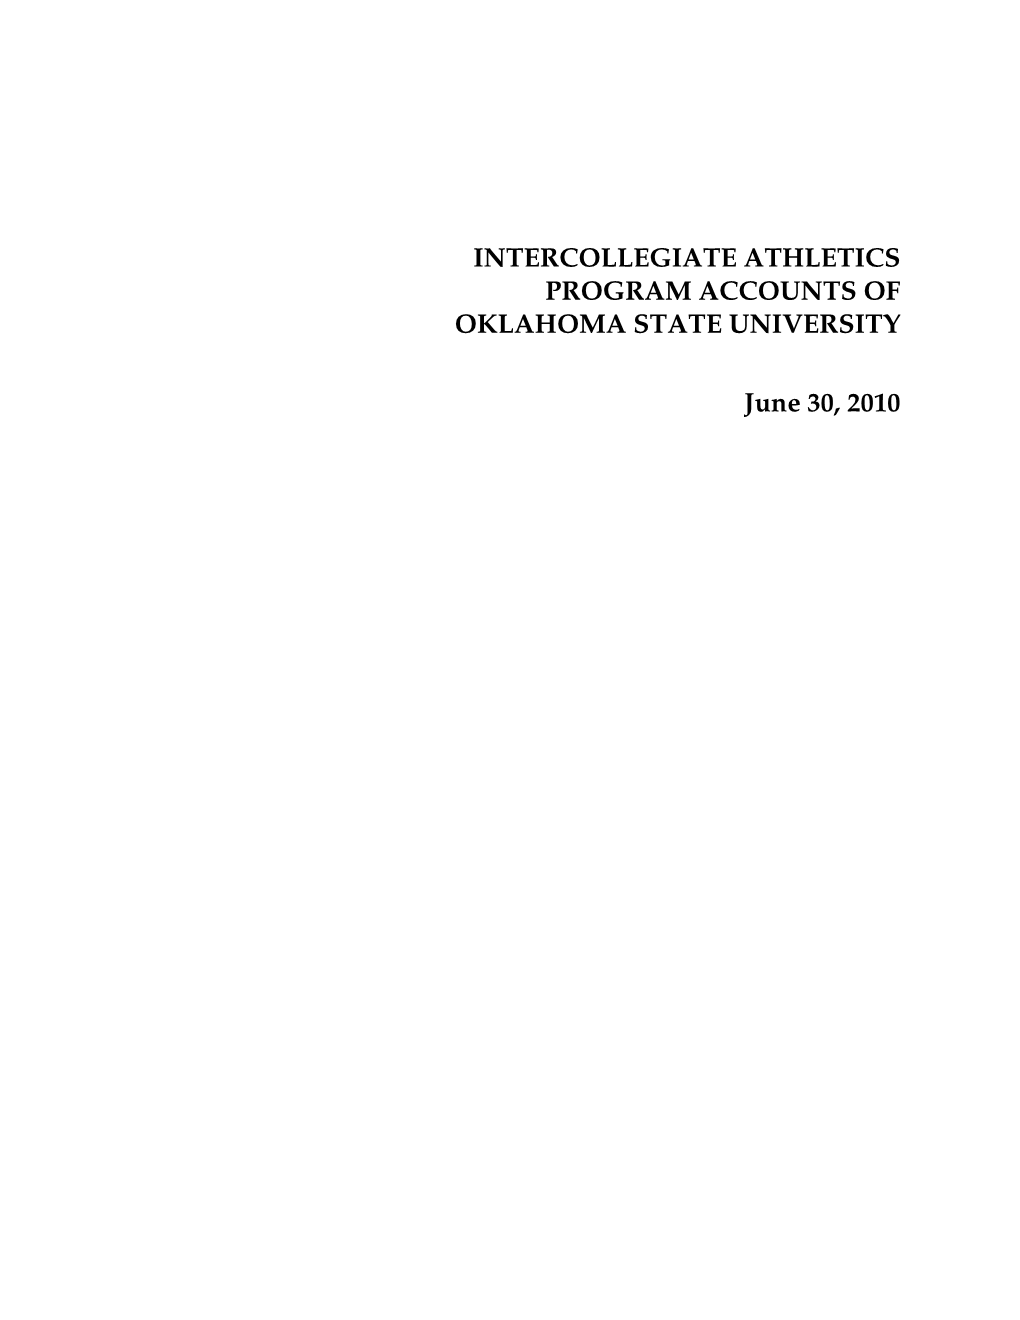 INTERCOLLEGIATE ATHLETICS PROGRAM ACCOUNTS of OKLAHOMA STATE UNIVERSITY June 30, 2010